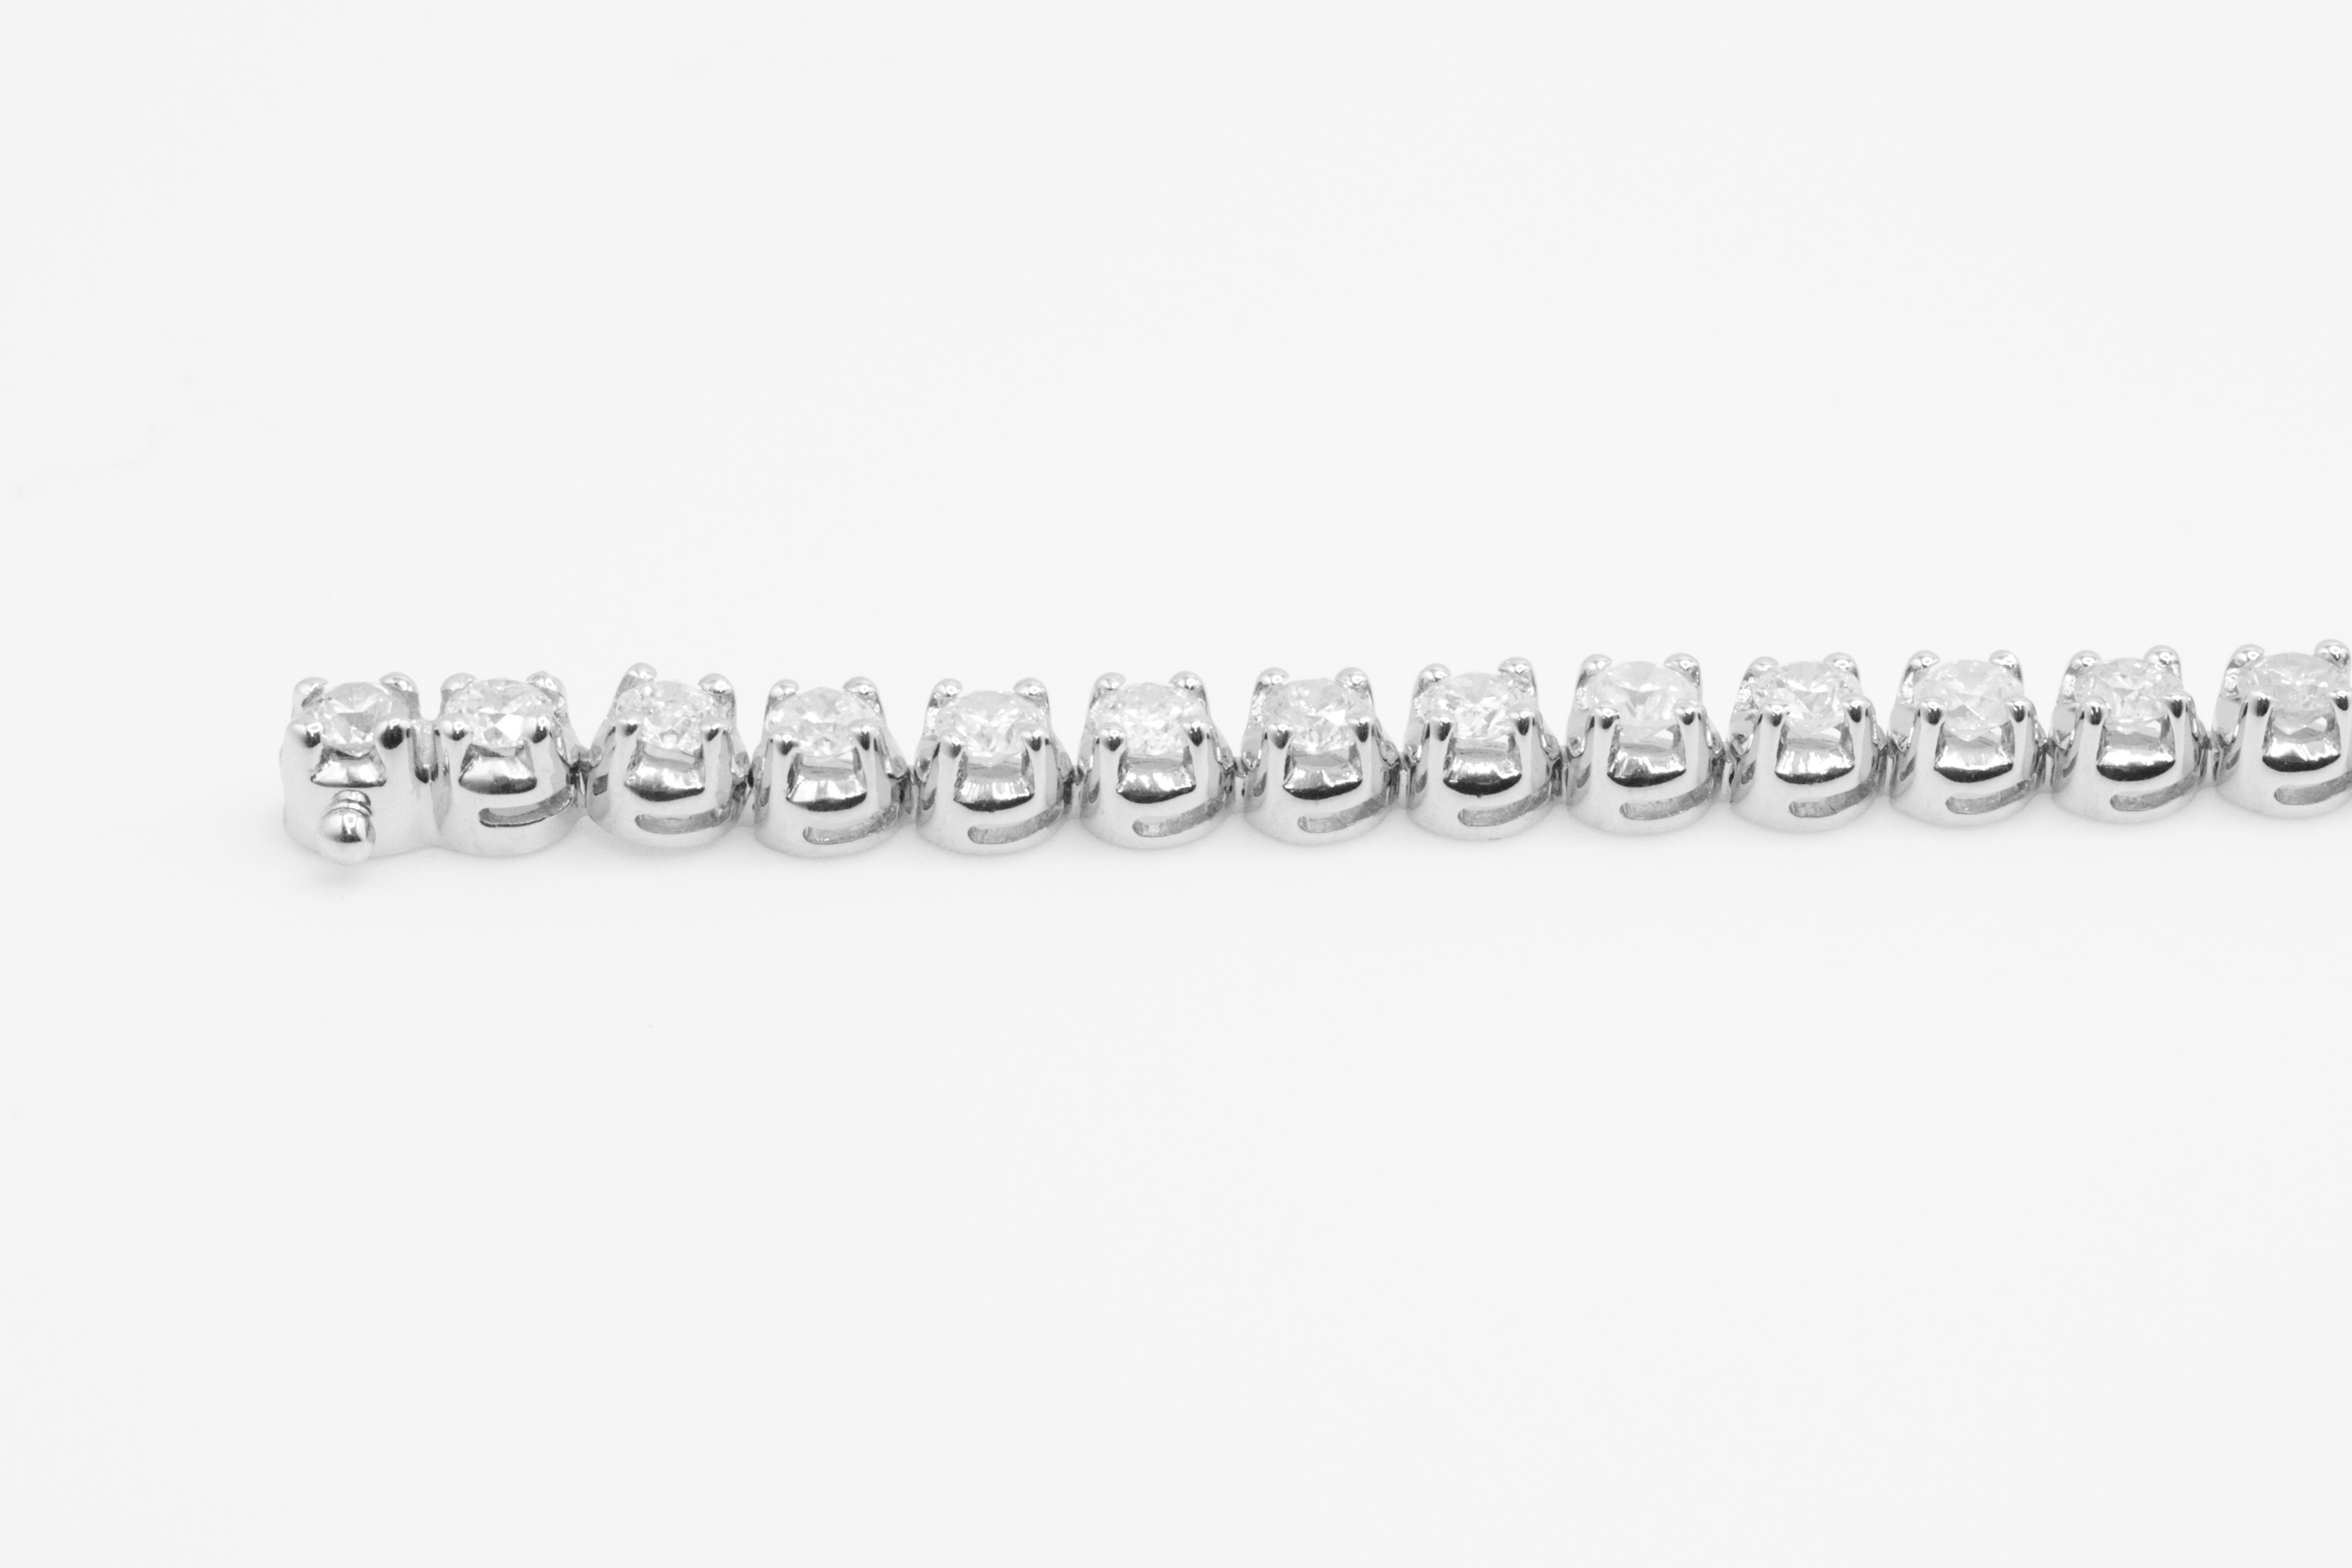 7.0 Carat 18ct White Gold Tennis Bracelet set with Round Brilliant Cut Natural Diamonds - Image 13 of 16